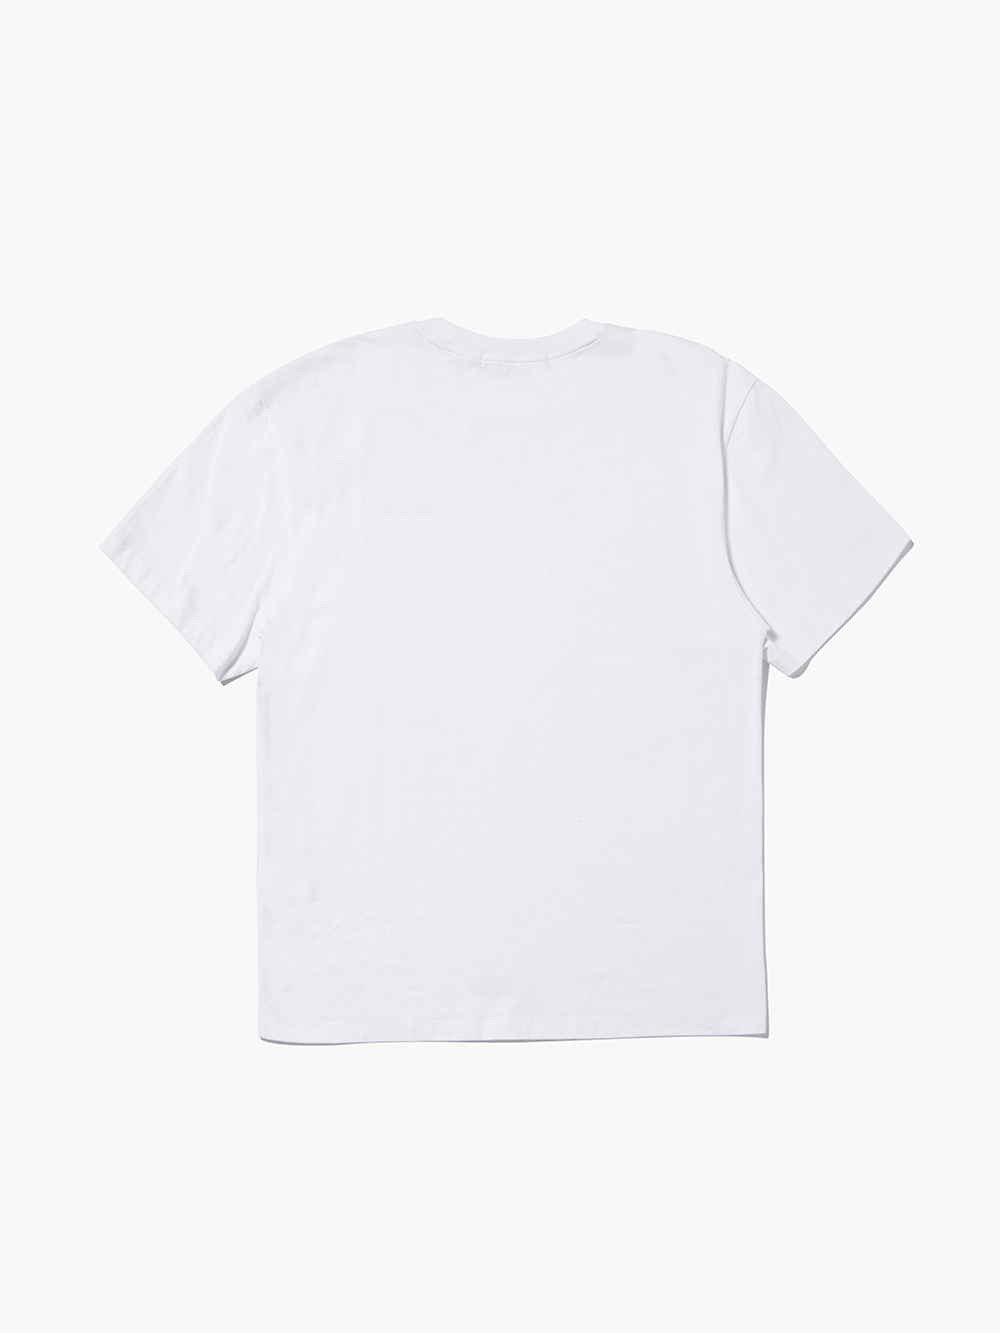 Billboard Basic Small Logo Half T-shirt_White